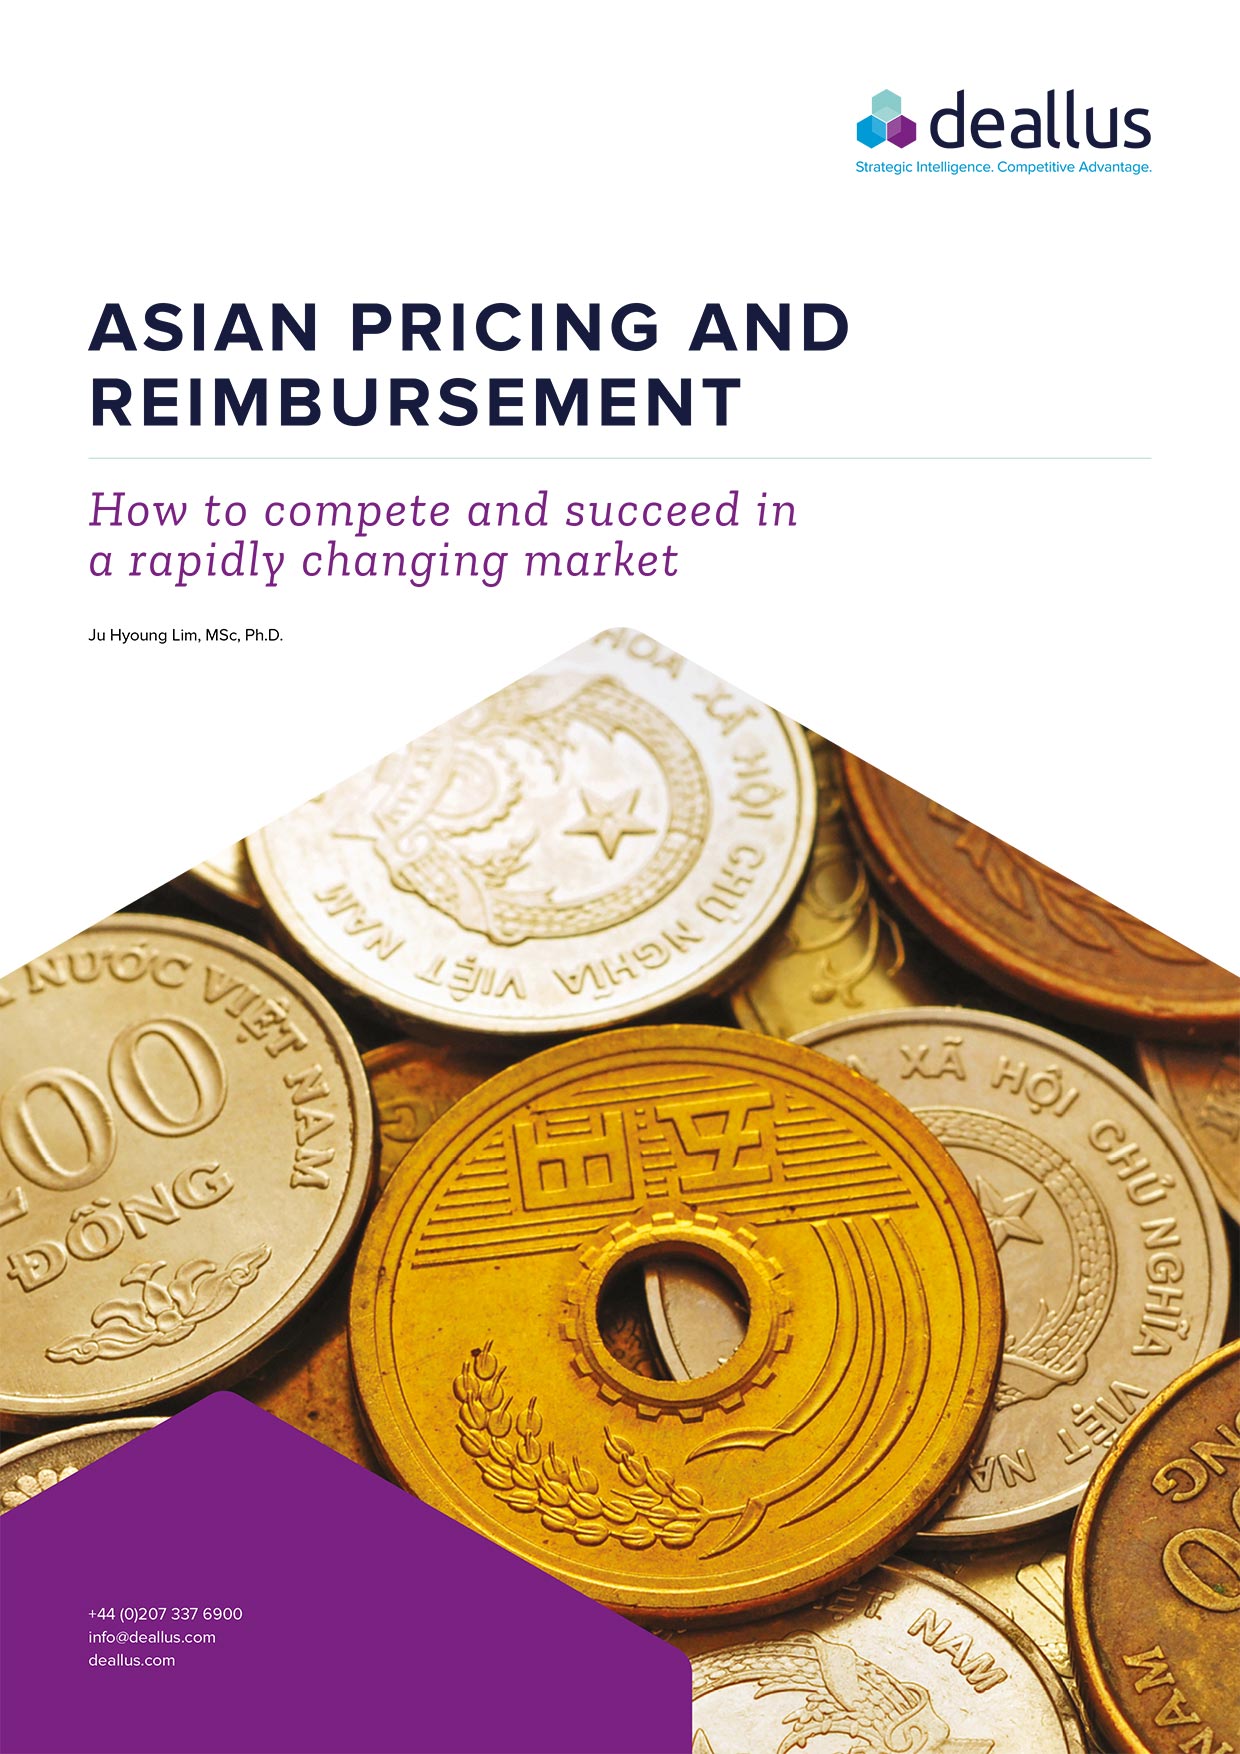 Deallus Asian Pricing & Reimbursement Whitepaper